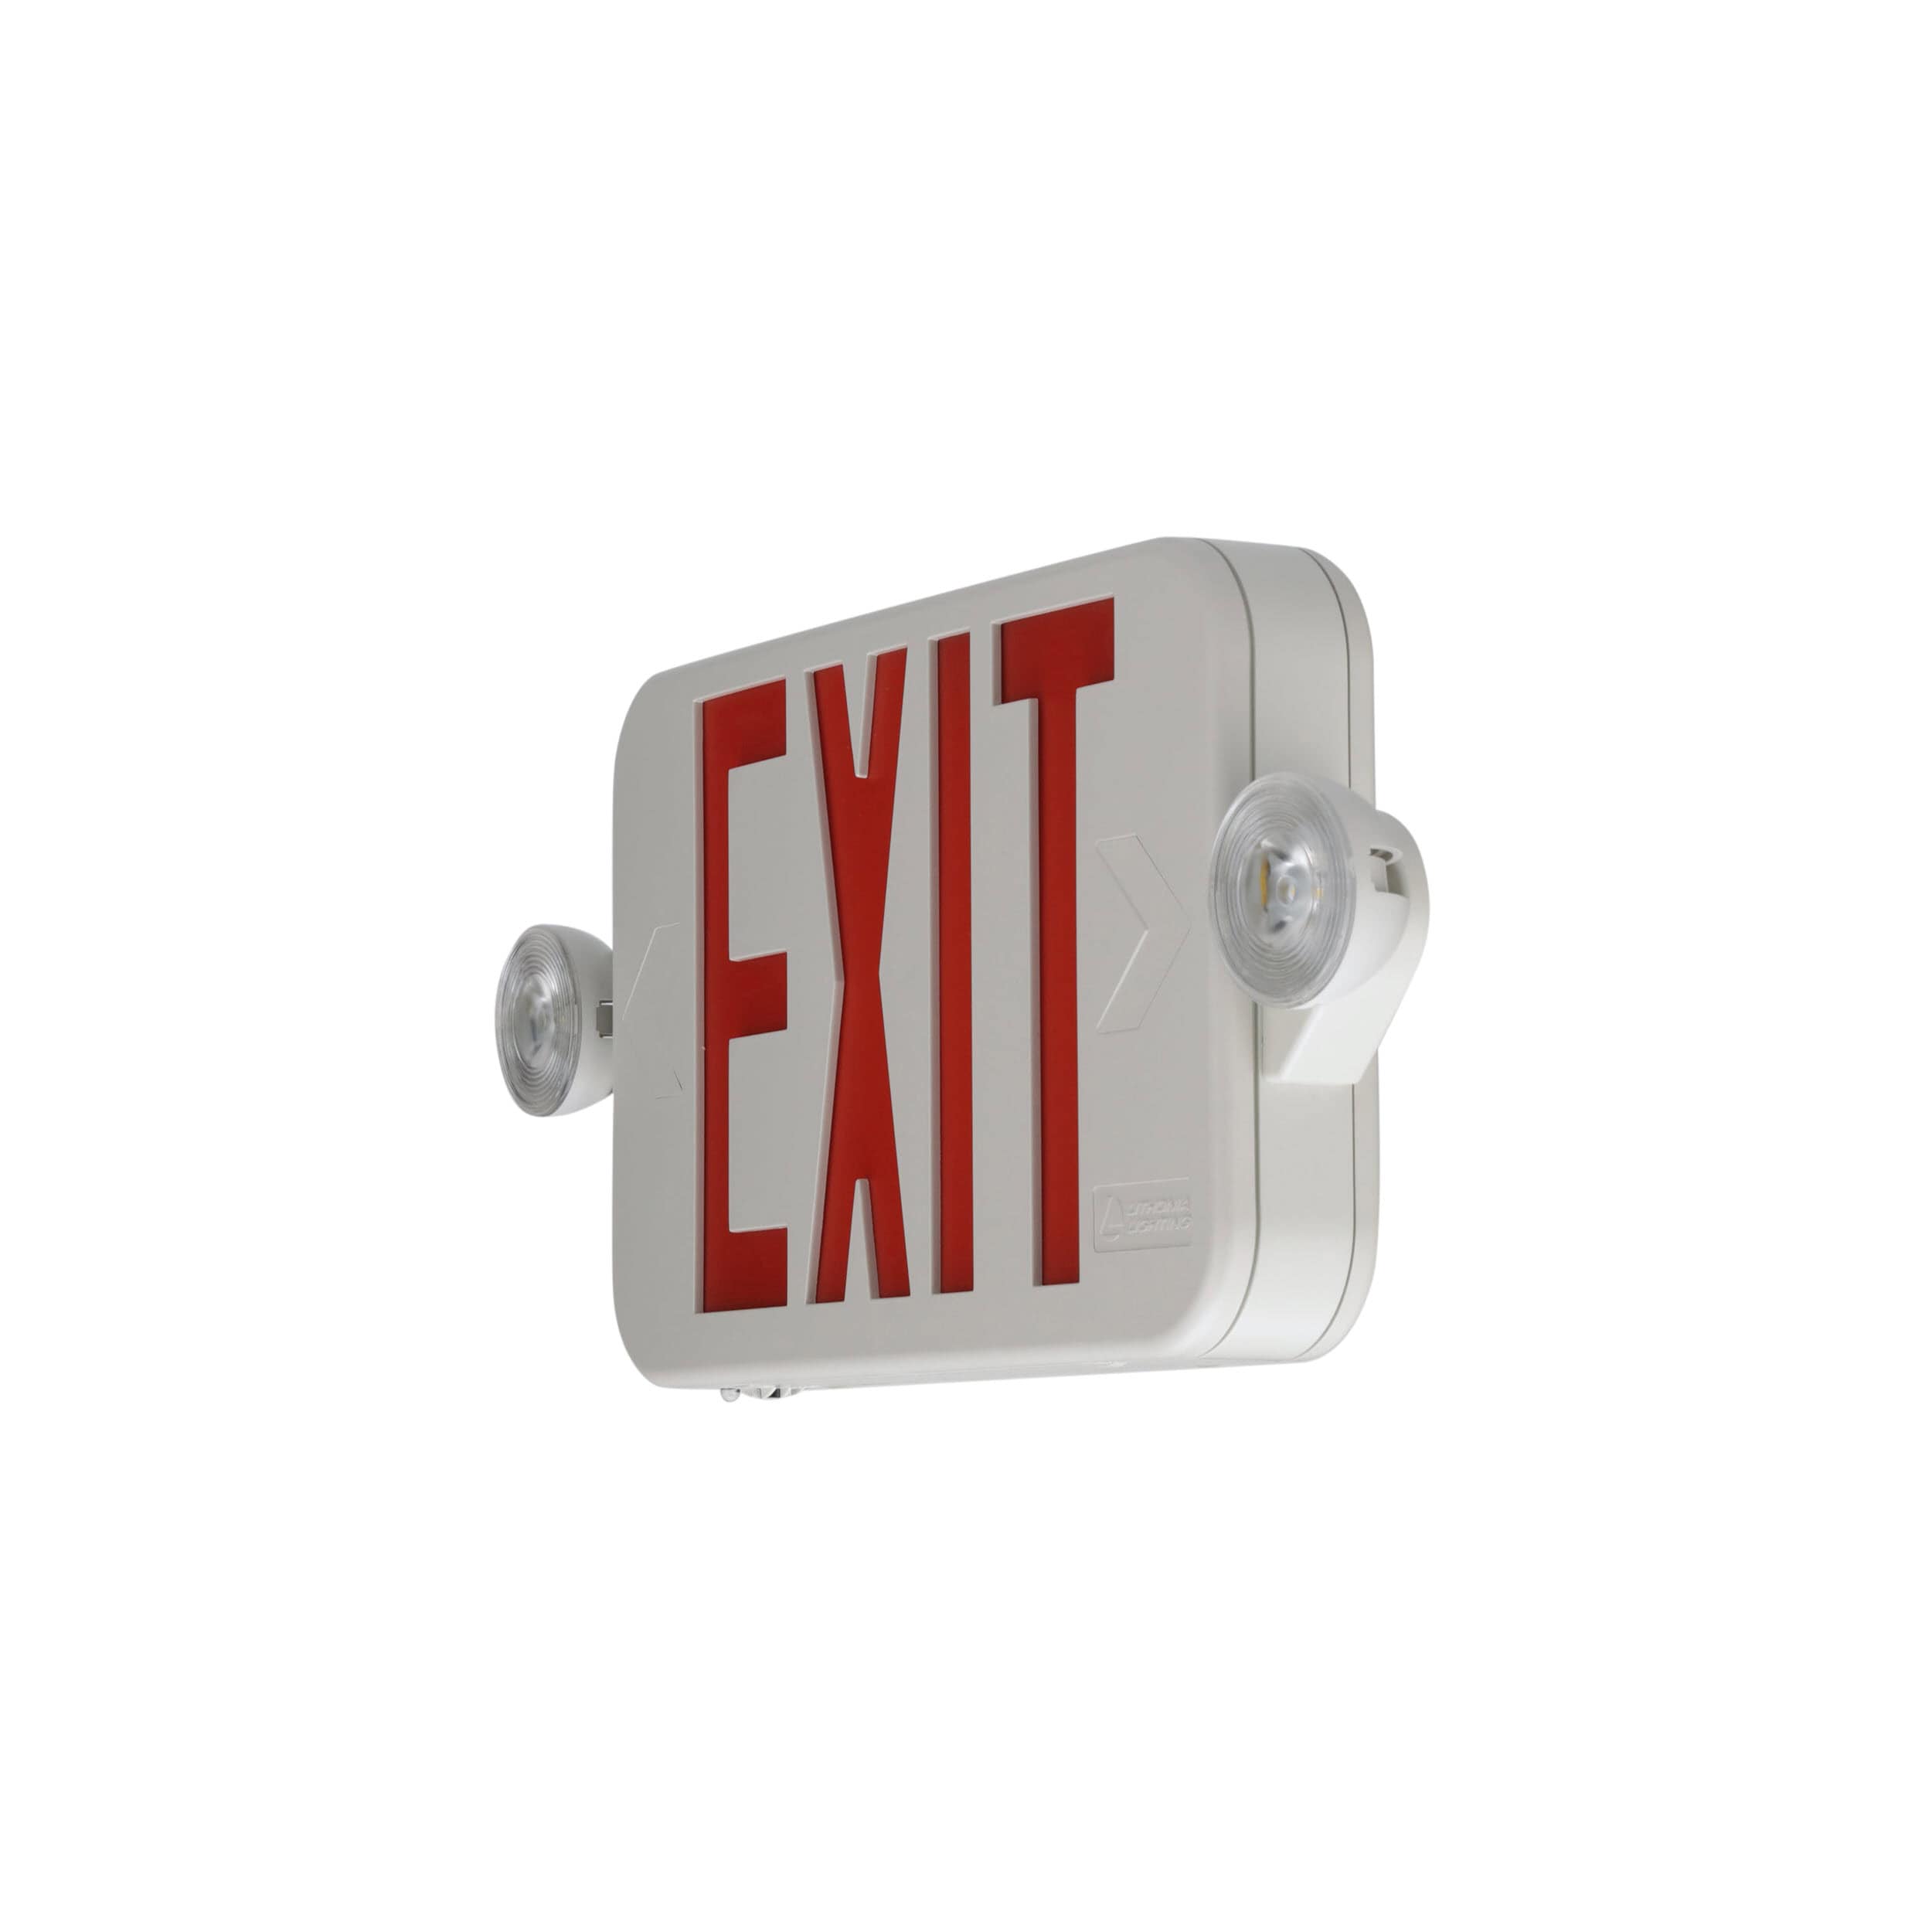 eTopLighting 6 Pack Exit Emergency LED Sign Battery Back-up Red Letter Light 